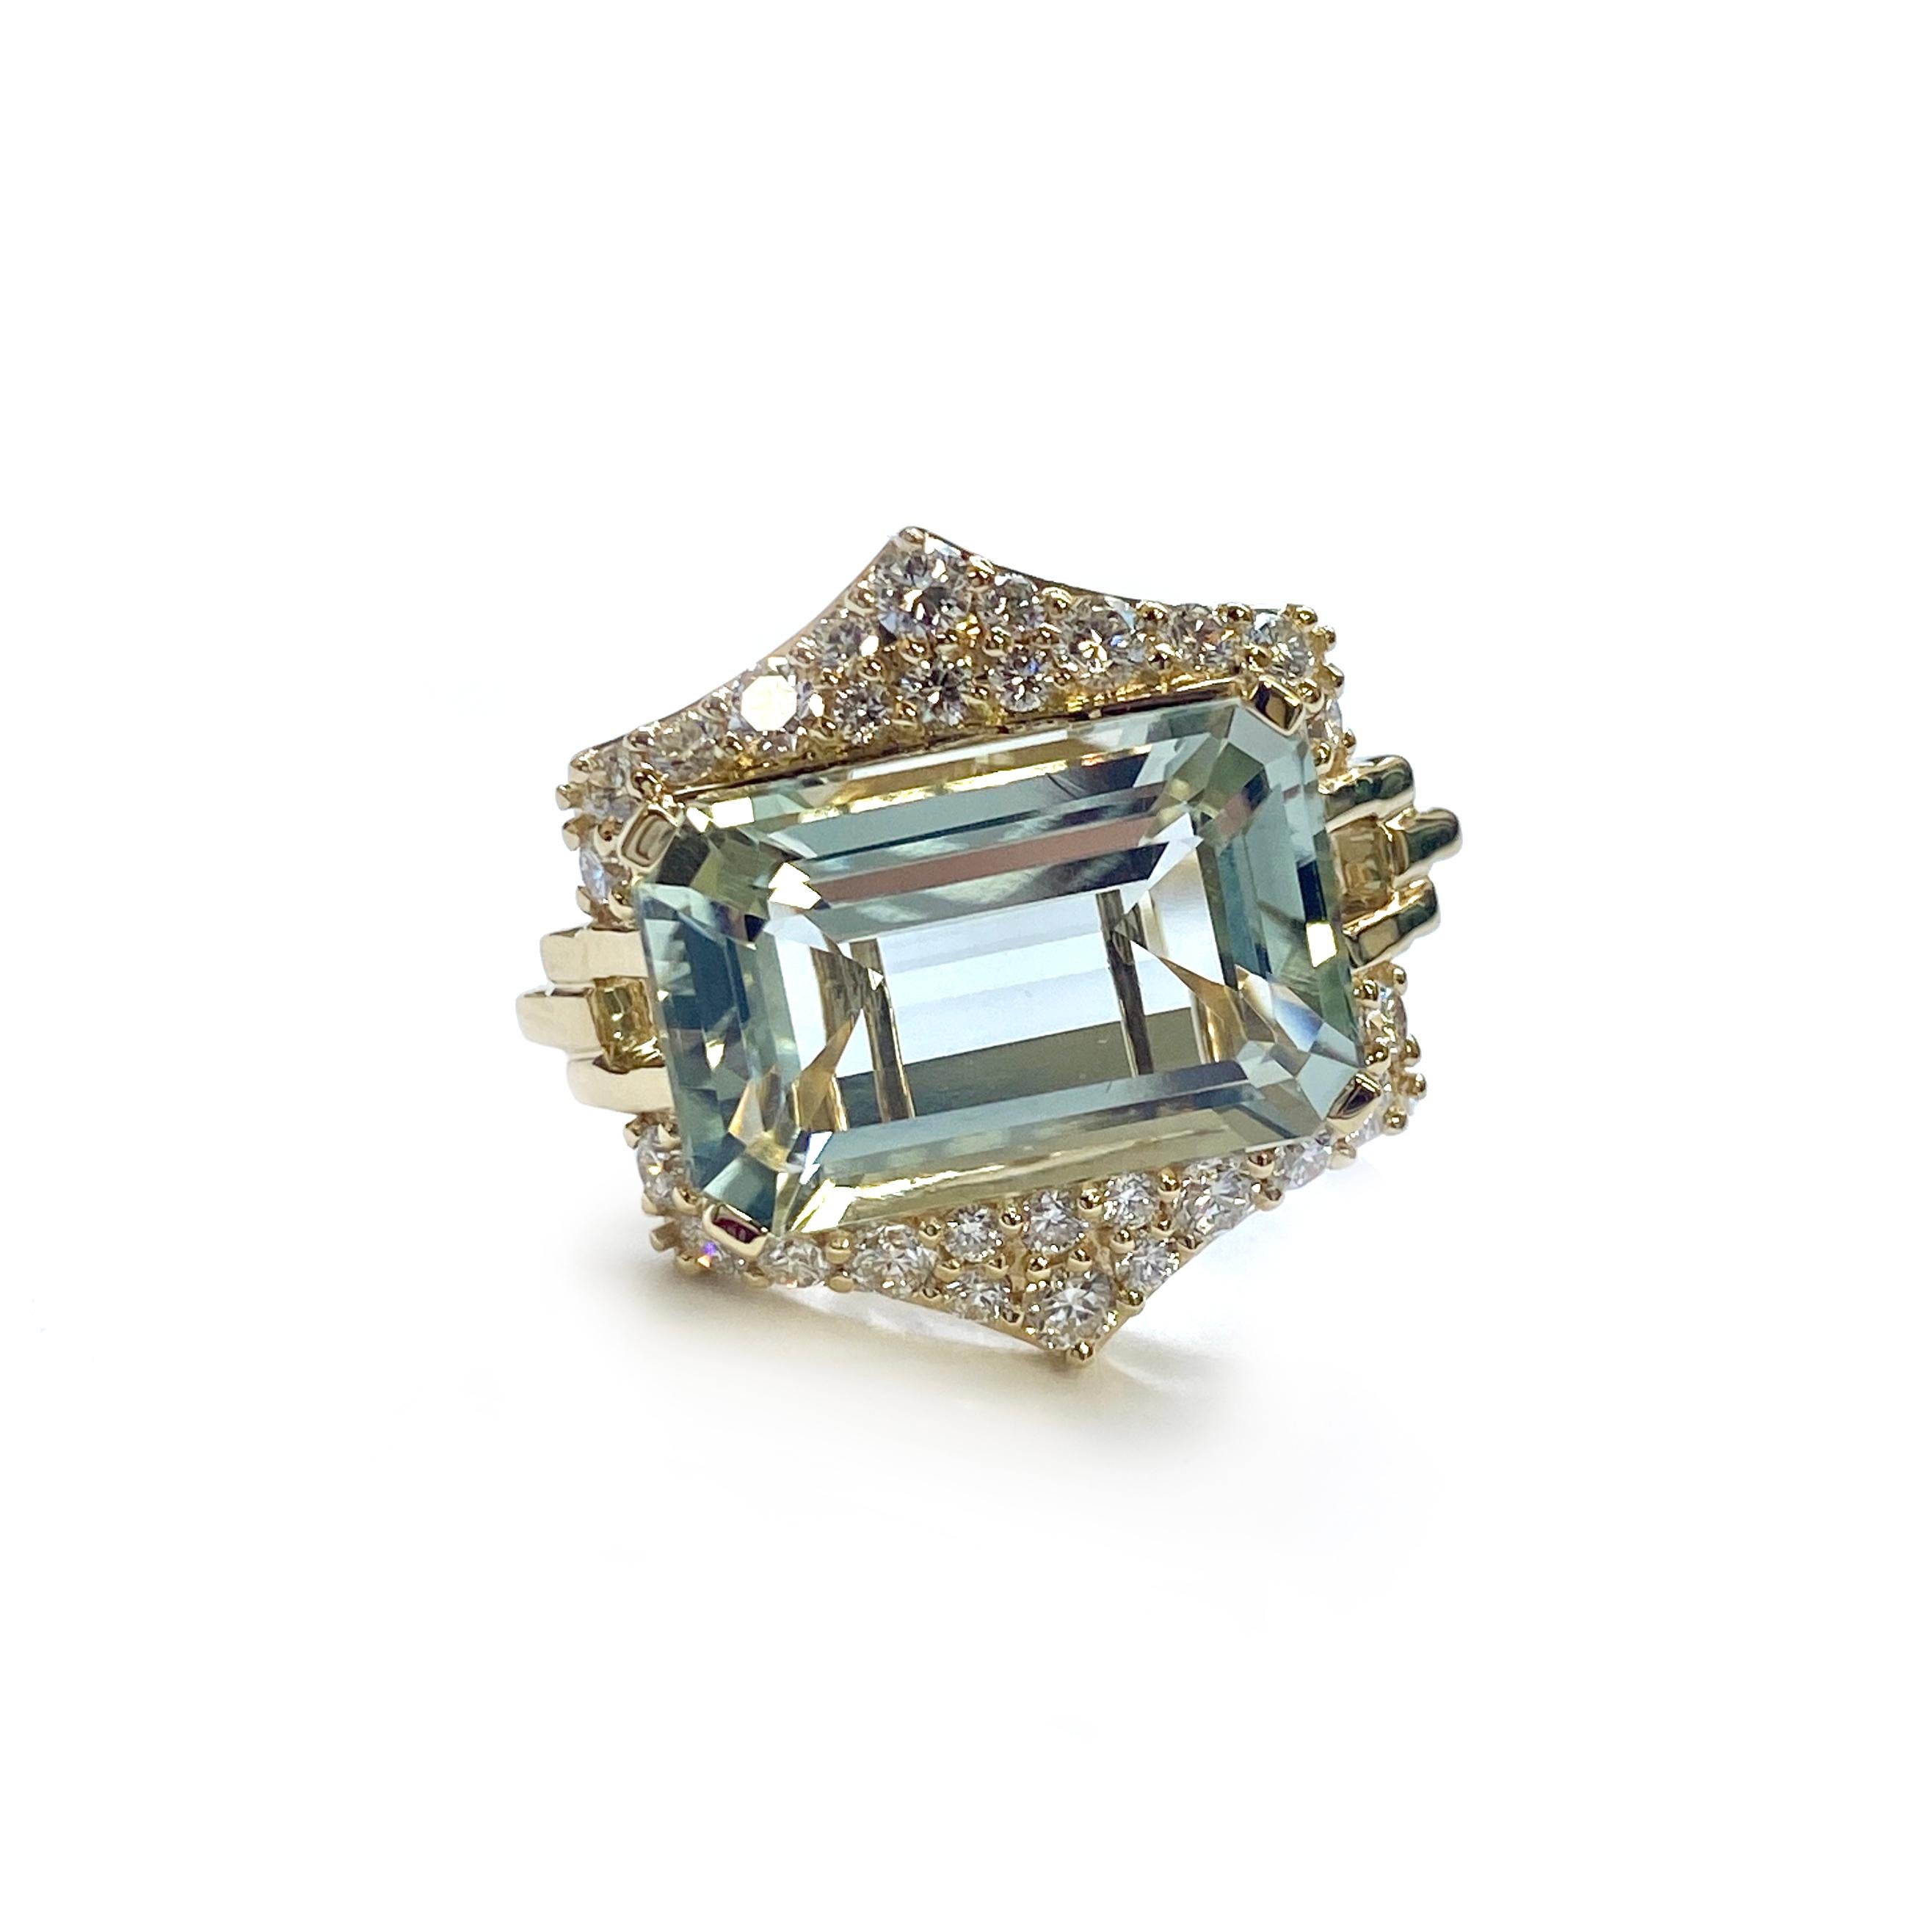 Contemporary Goshwara Prasiolite Emerald Cut with Diamonds Ring For Sale